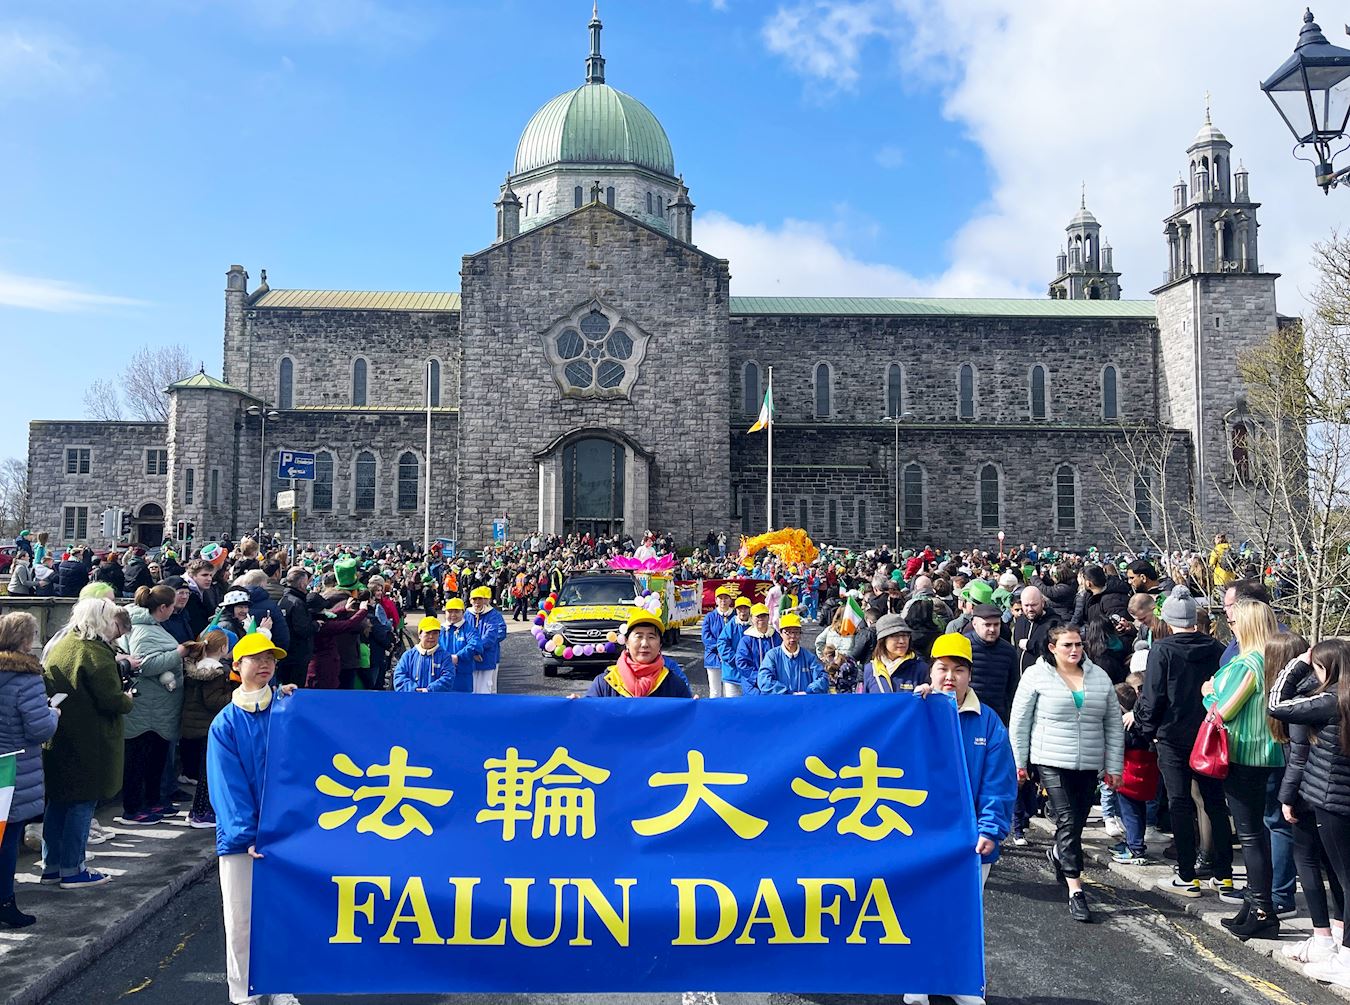 Image for article ایرلند: استقبال از فالون دافا در راهپیمایی روز سنت پاتریک در گالوی